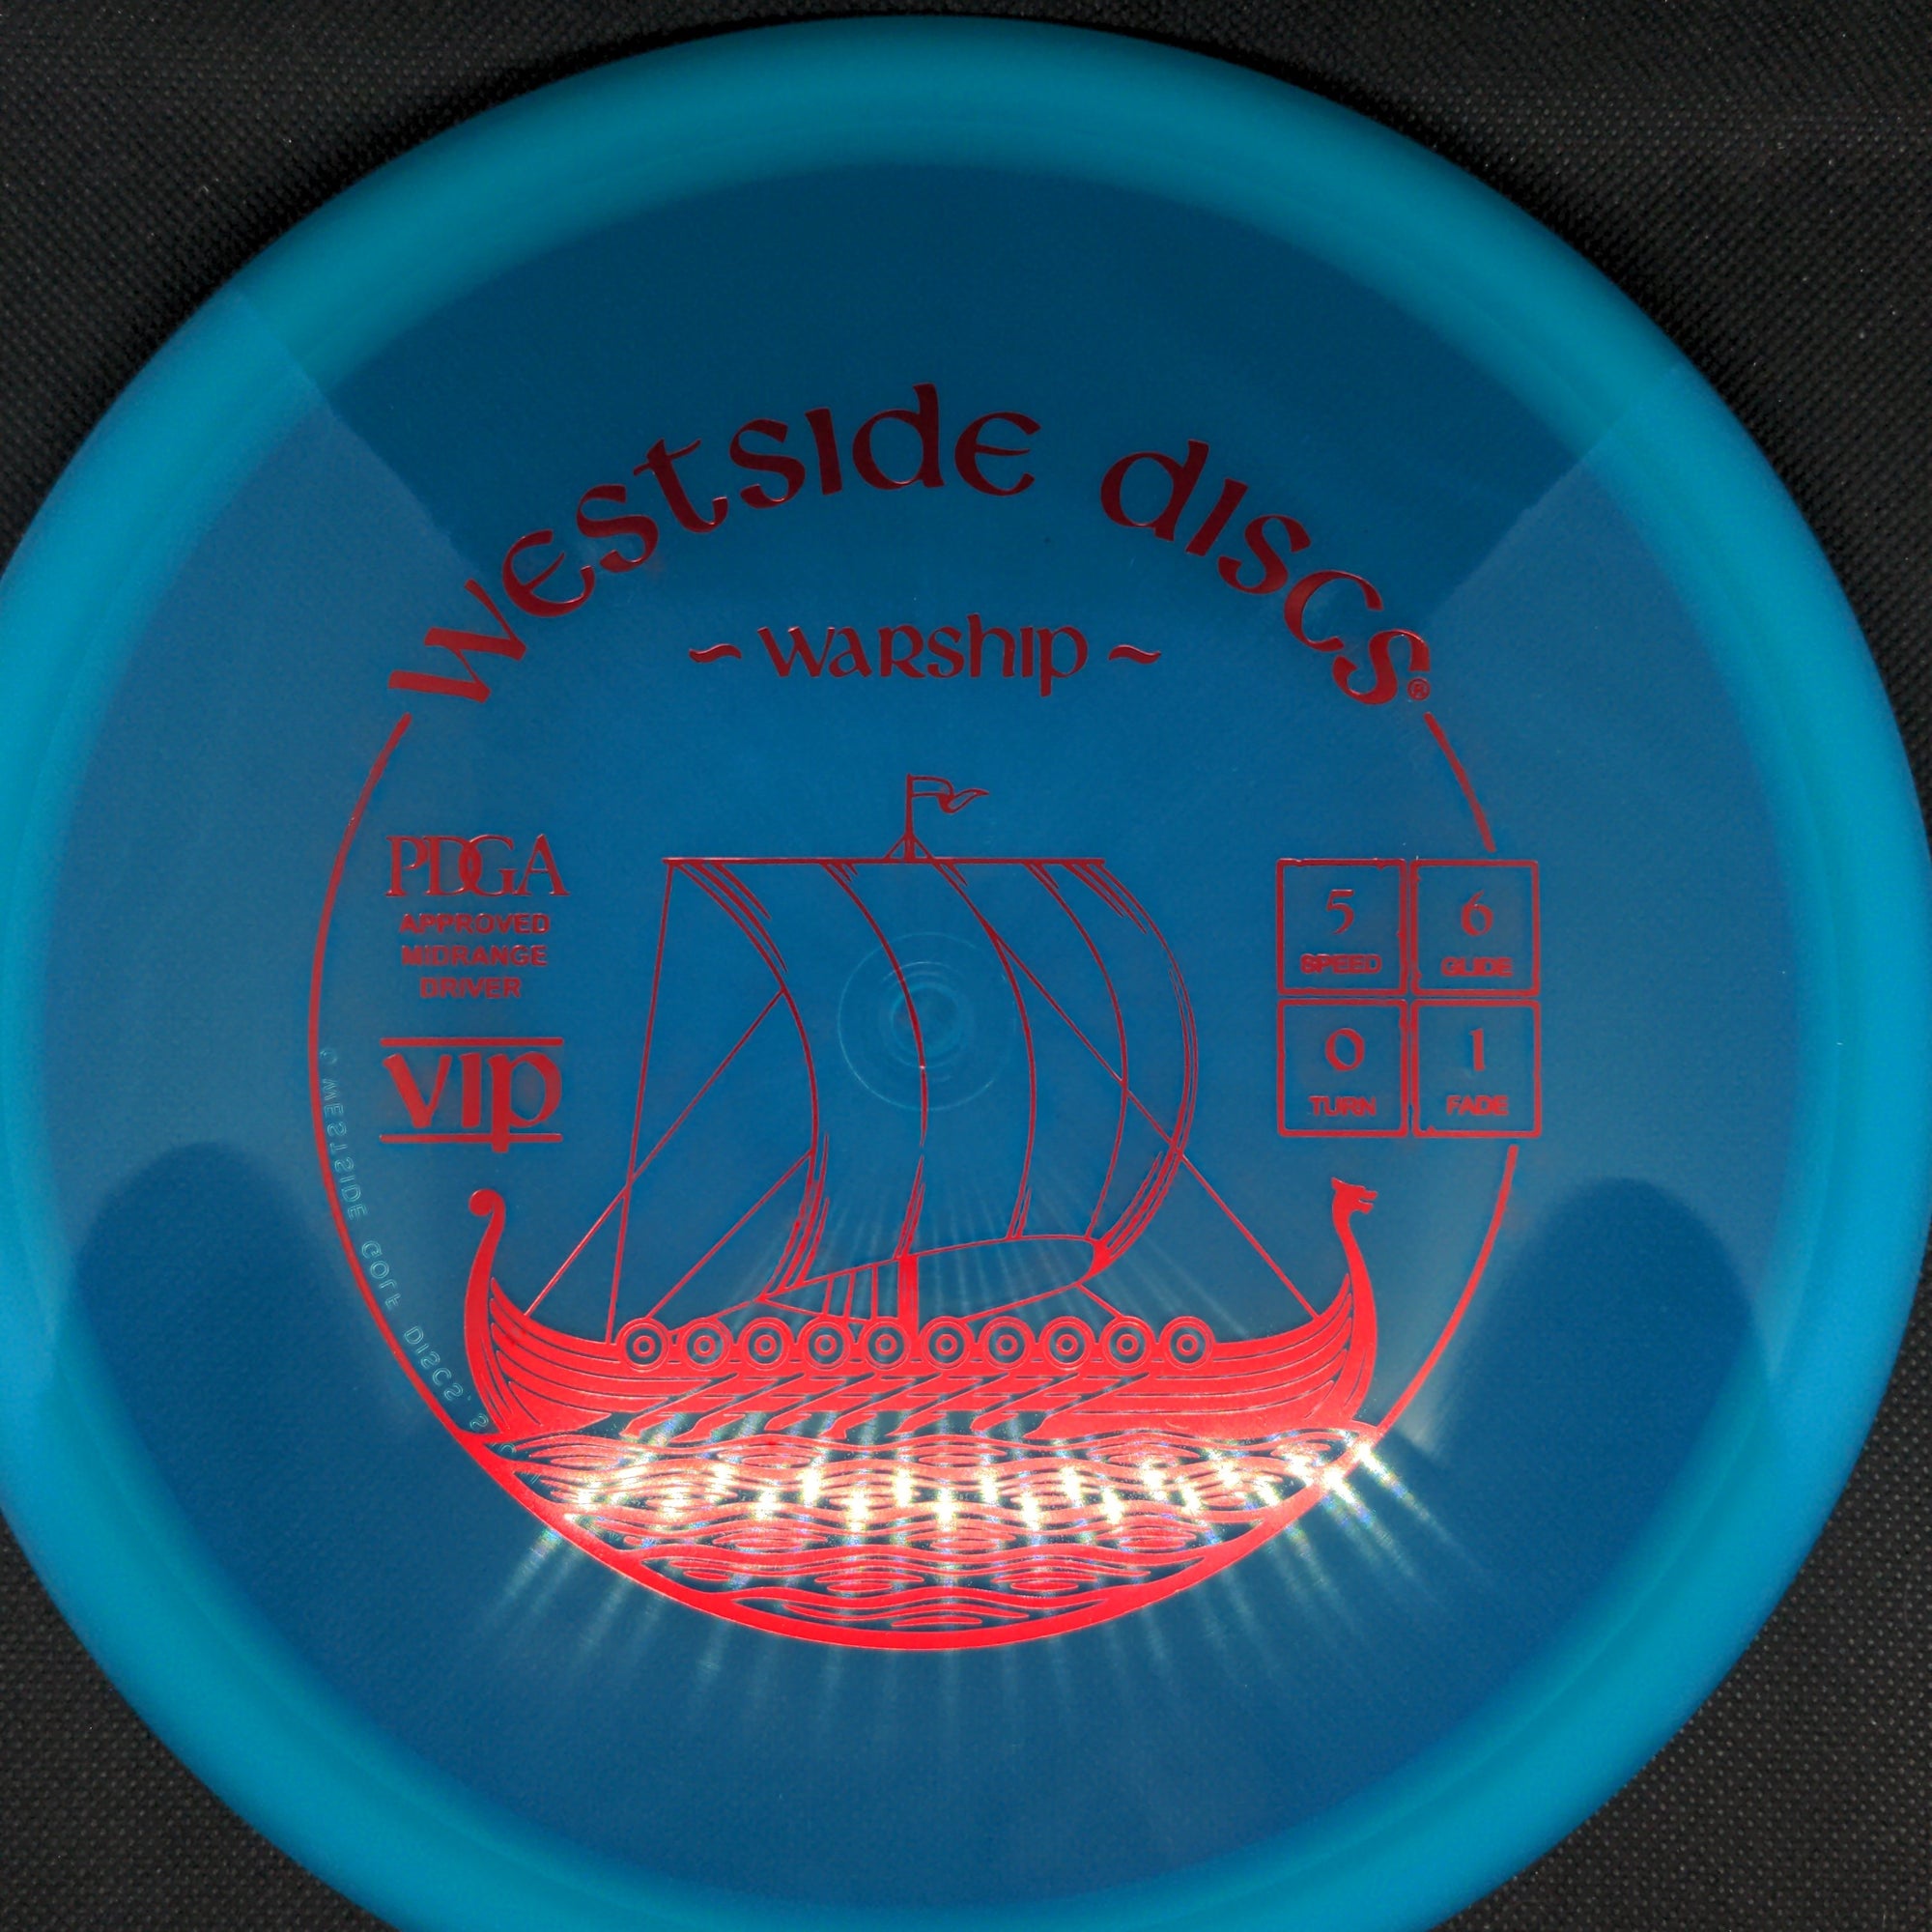 Westside Discs Mid Range Blue Red Stamp 175g VIP Warship